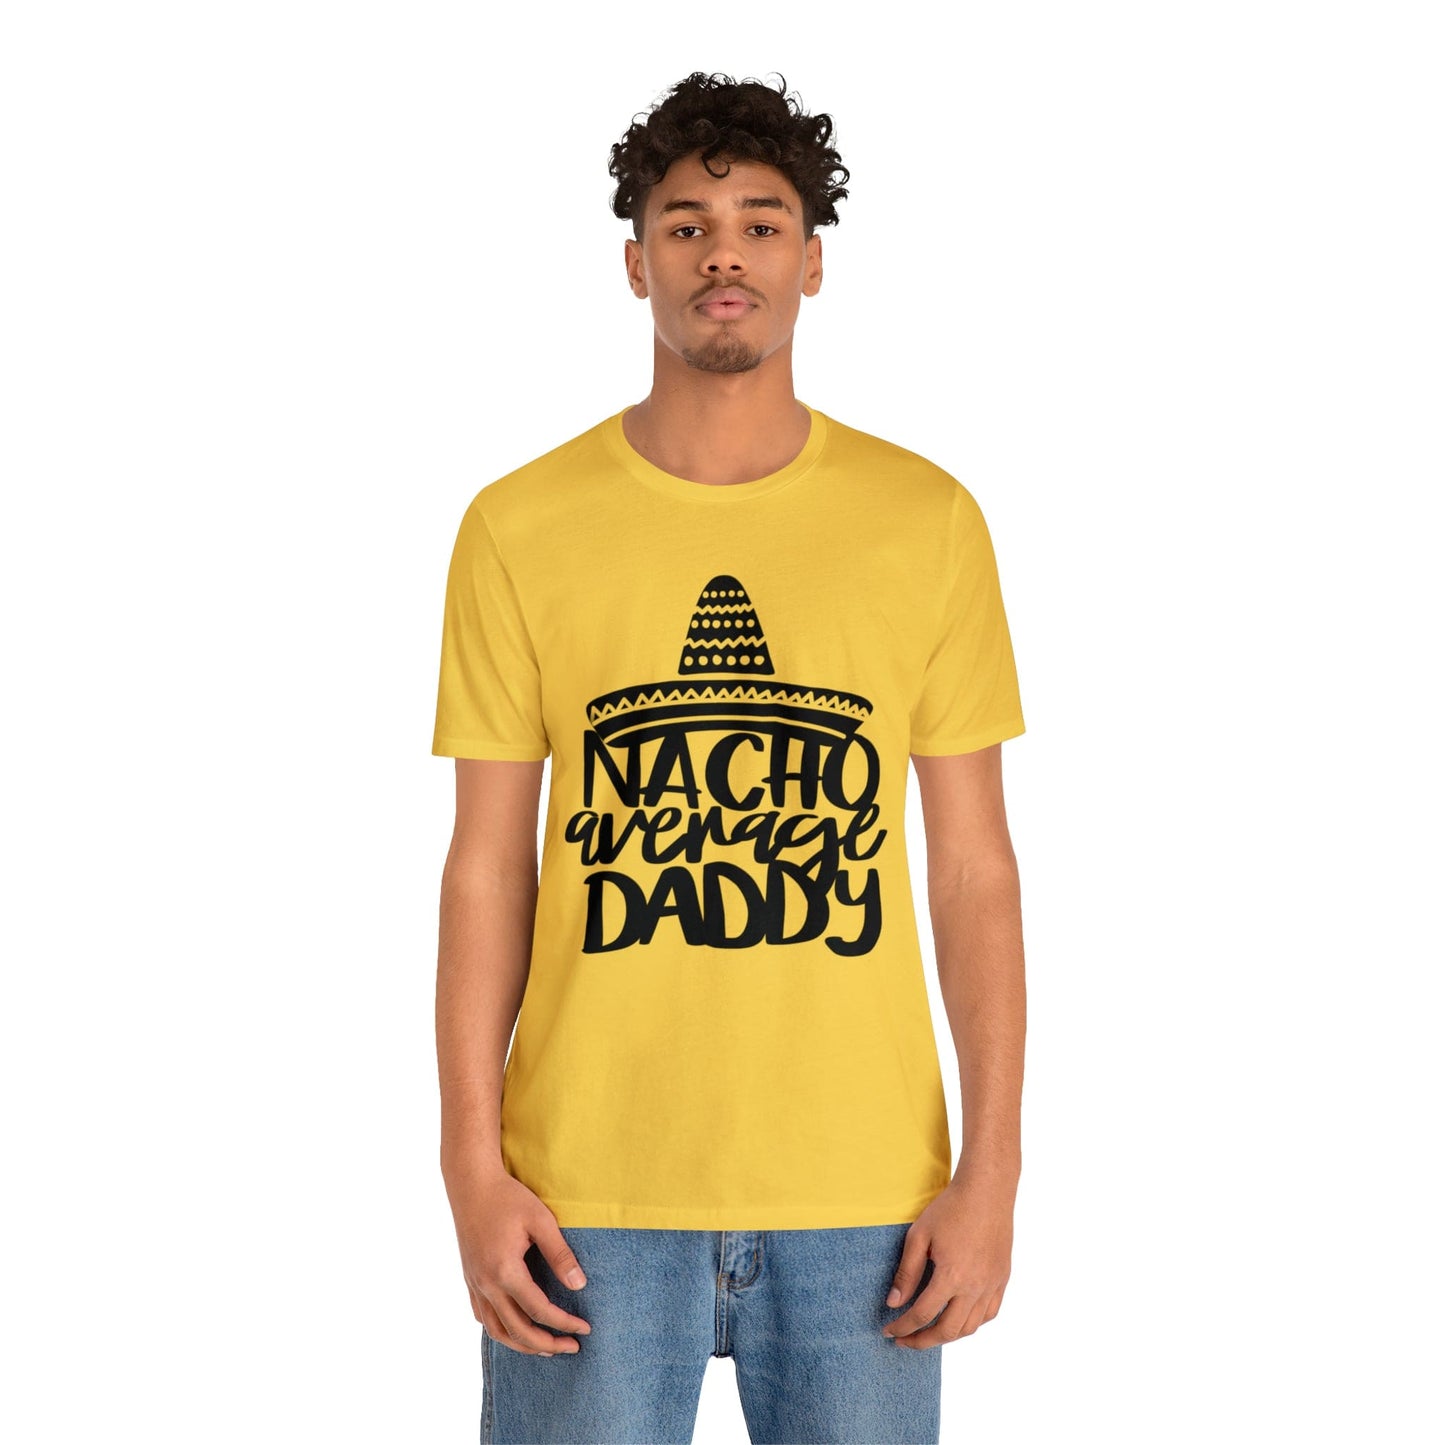 Nacho Average Daddy - Father's Day T-Shirt